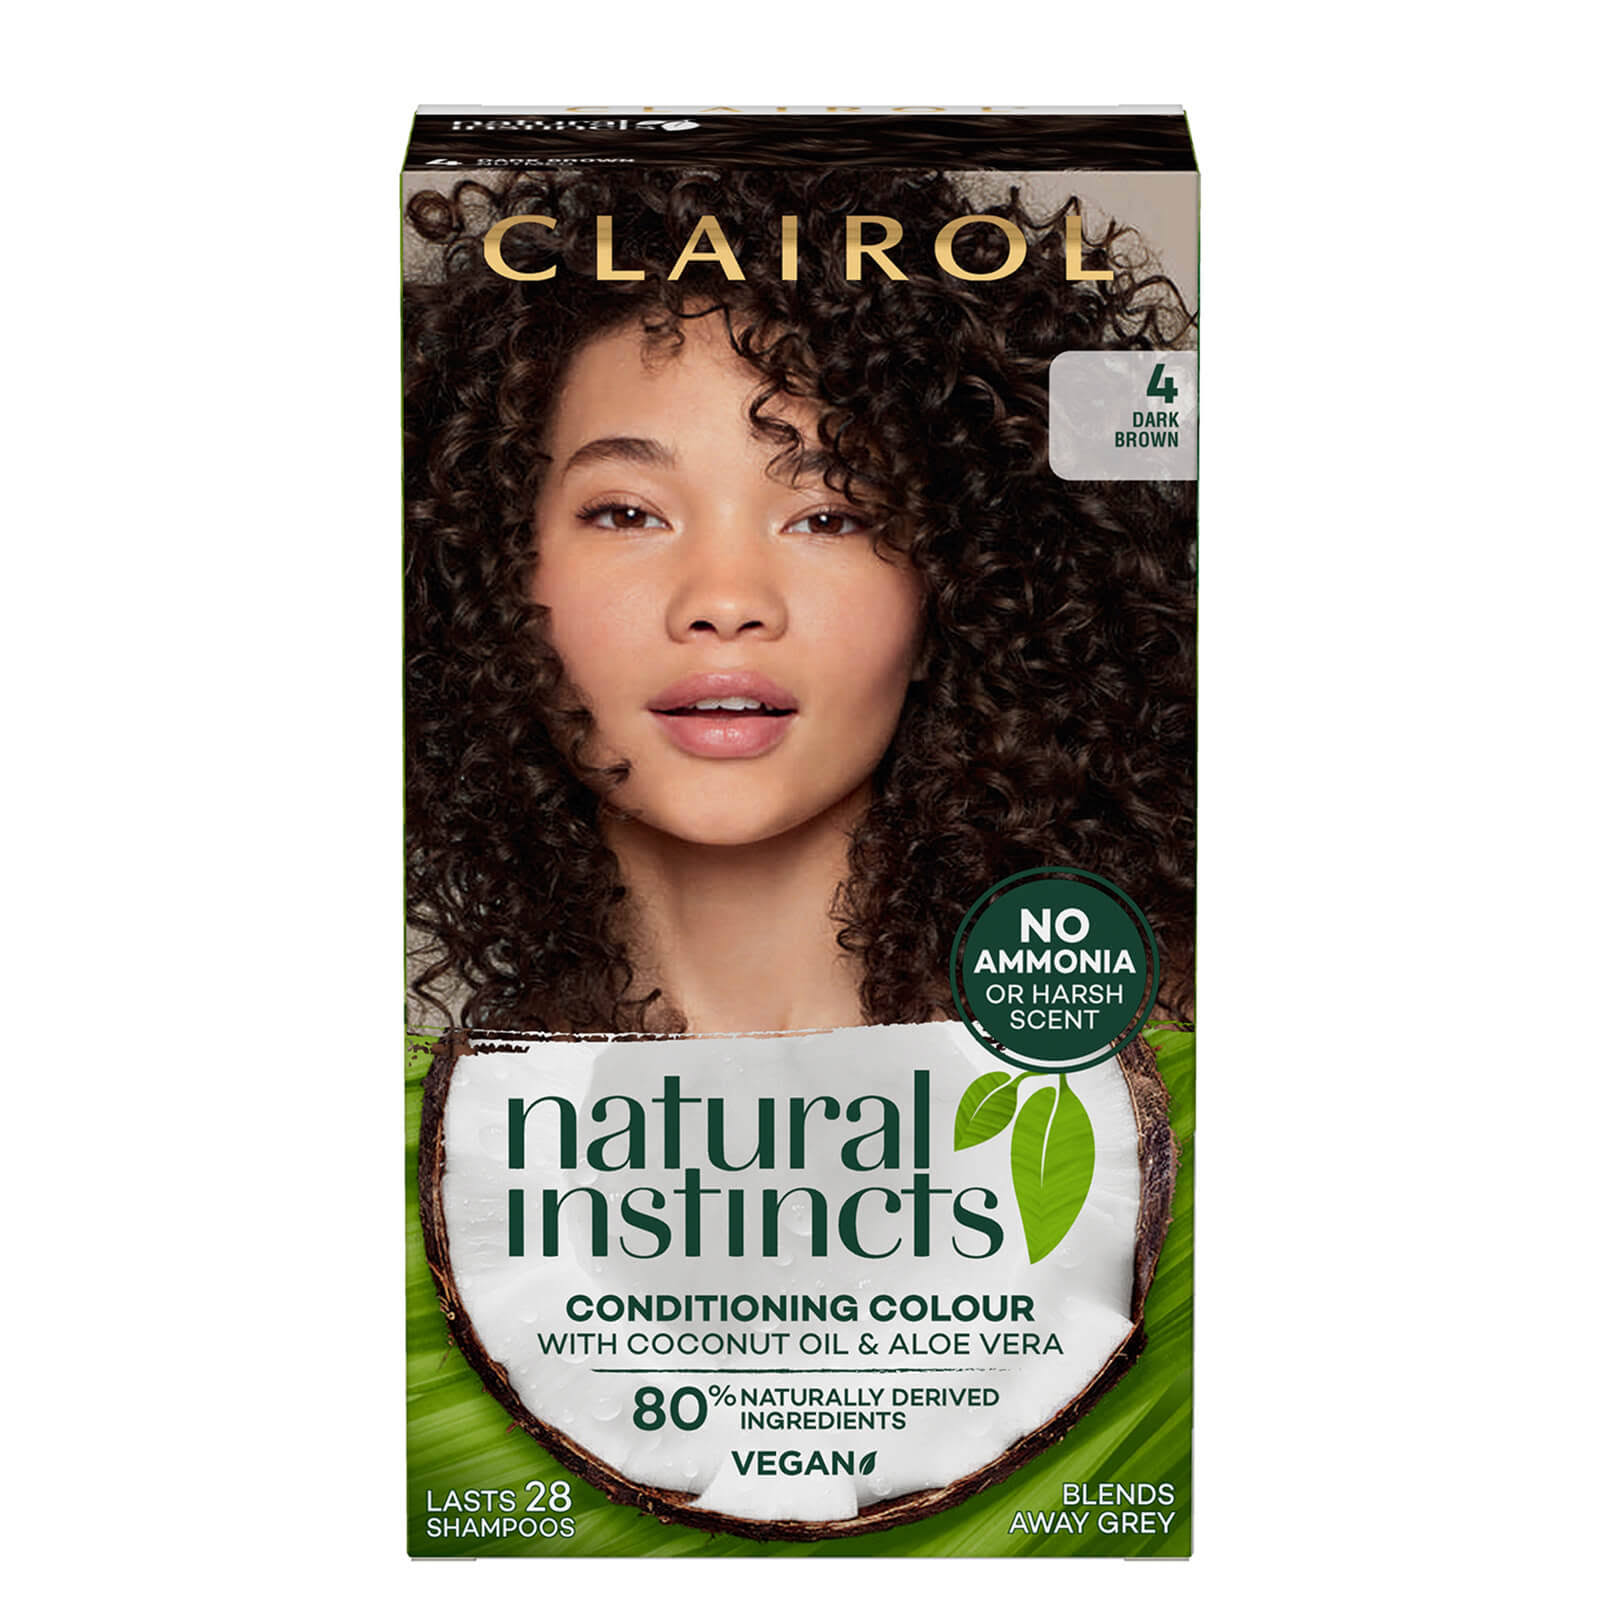 Clairol Natural Instincts Semi-Permanent No Ammonia Vegan Hair Dye 177ml (Various Shades) - 4 Dark Brown